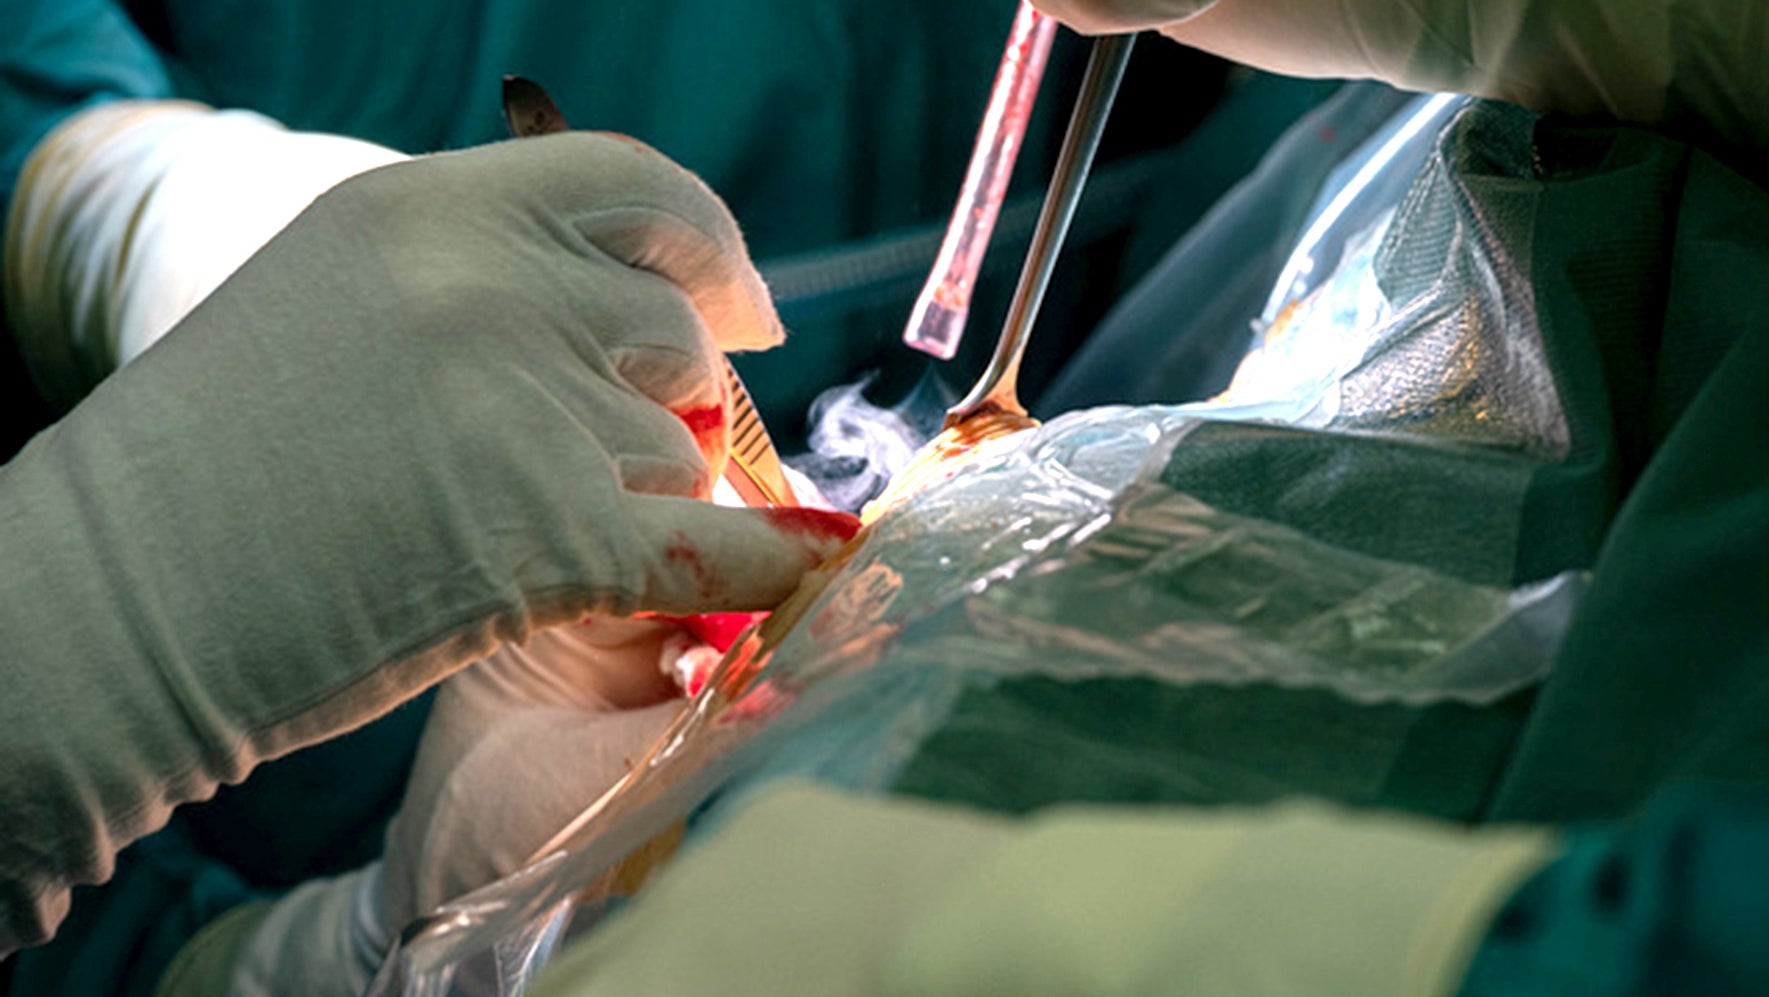 Chirurgische Operation